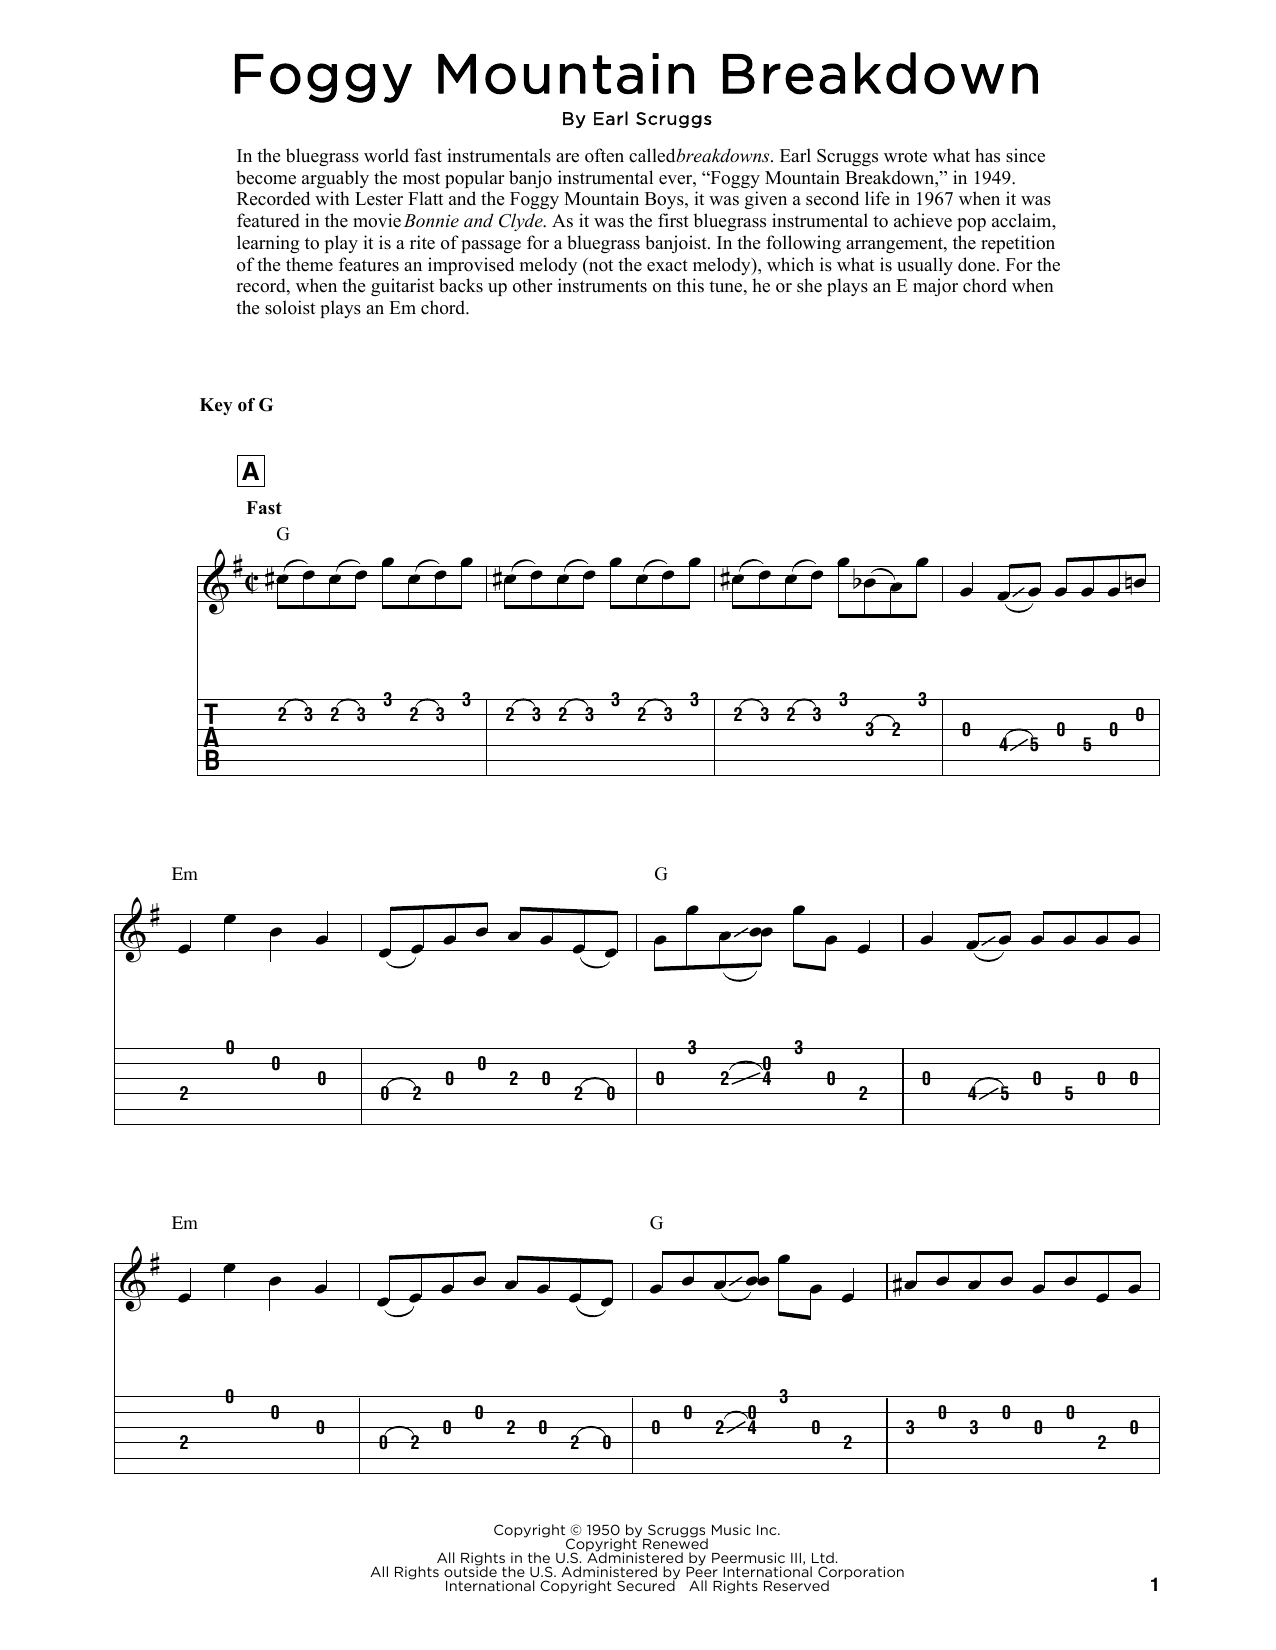 Lester Flatt & Earl Scruggs Foggy Mountain Breakdown (arr. Fred Sokolow) Sheet Music Notes & Chords for Banjo Tab - Download or Print PDF